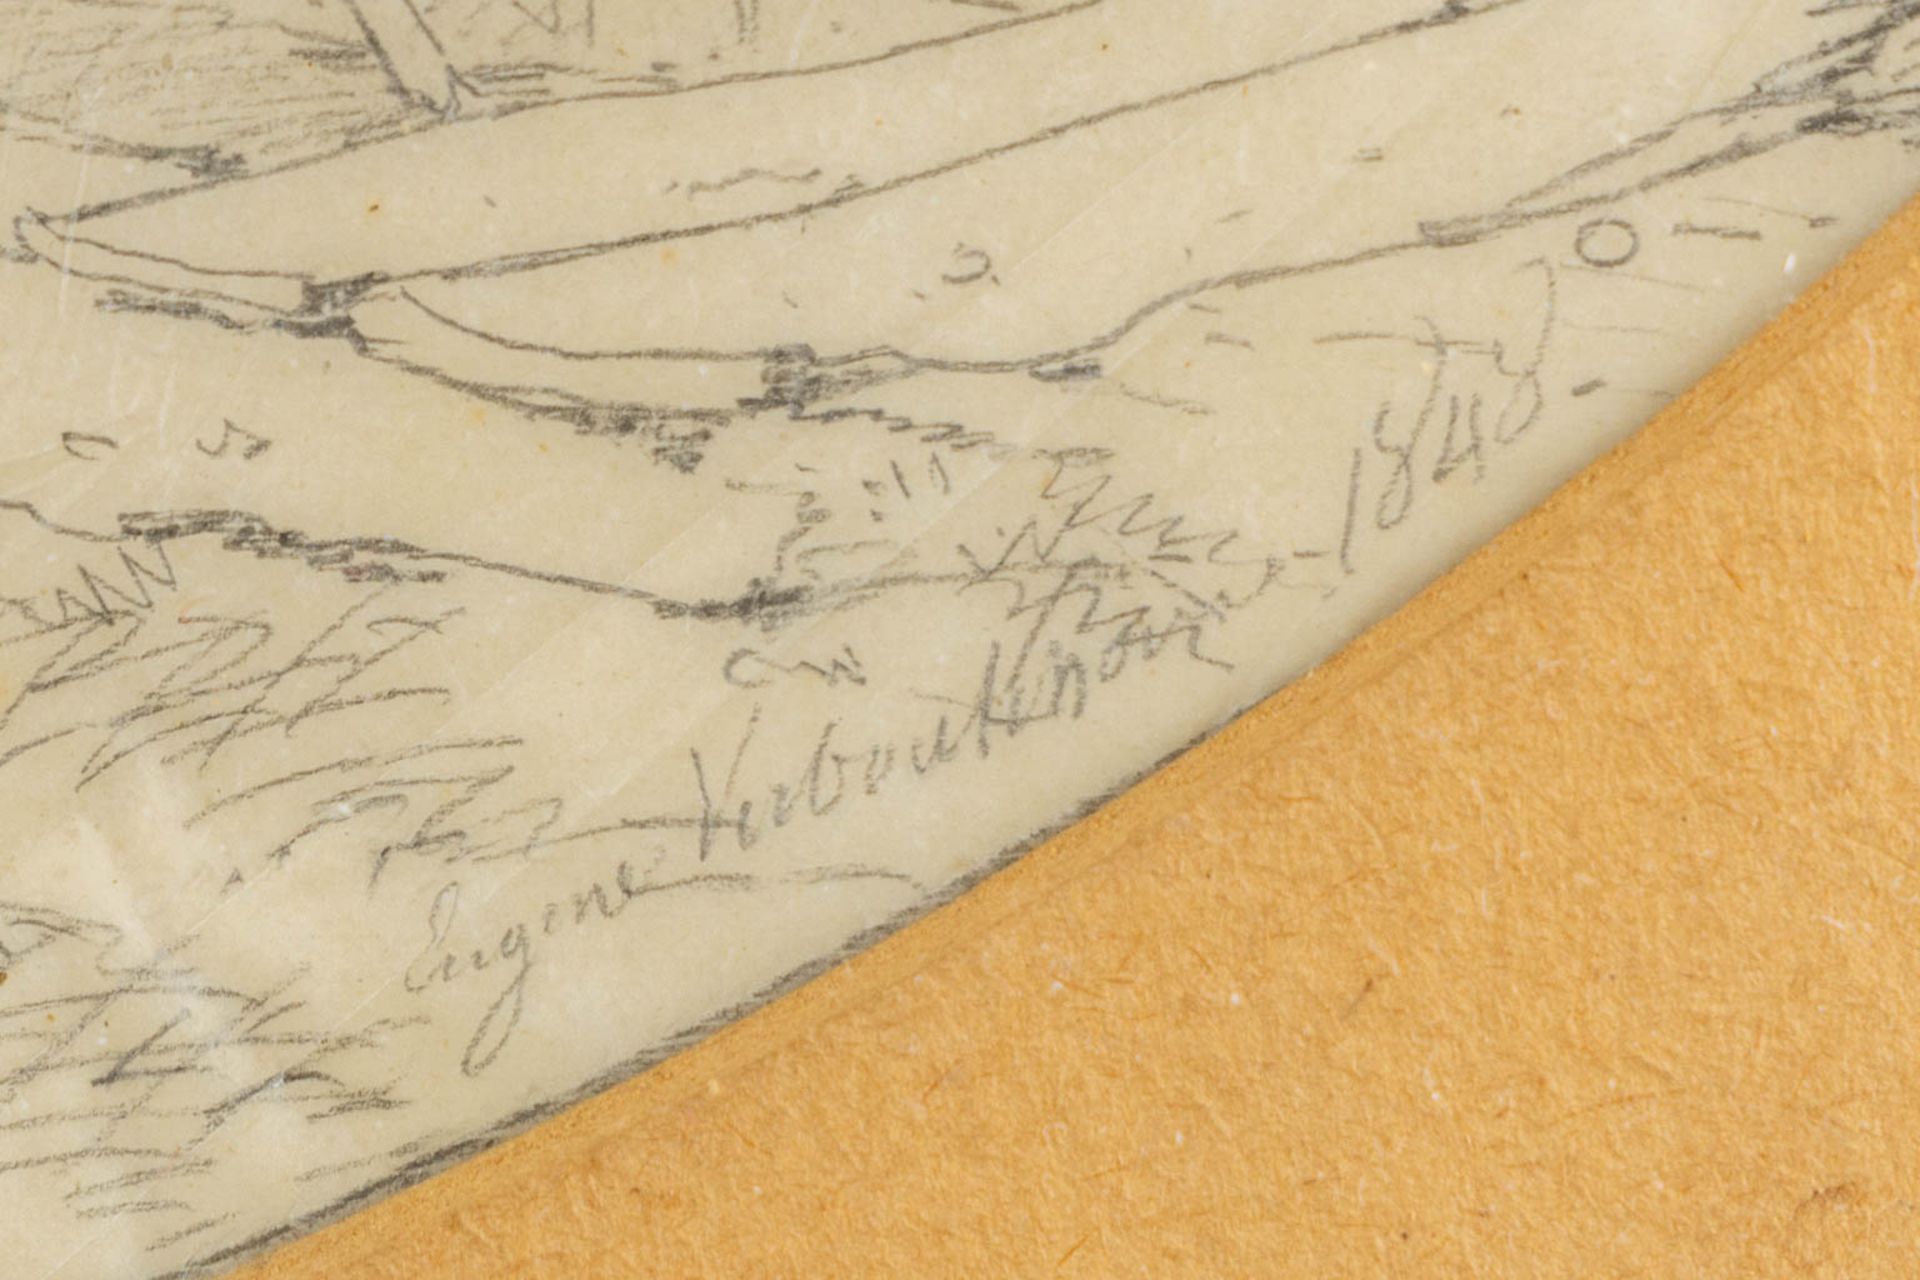 Eugène VERBOECKHOVEN (1798/99-1881) 'Pencil drawings' pencil on paper. (W:48 x H:36,5 cm) - Image 4 of 13